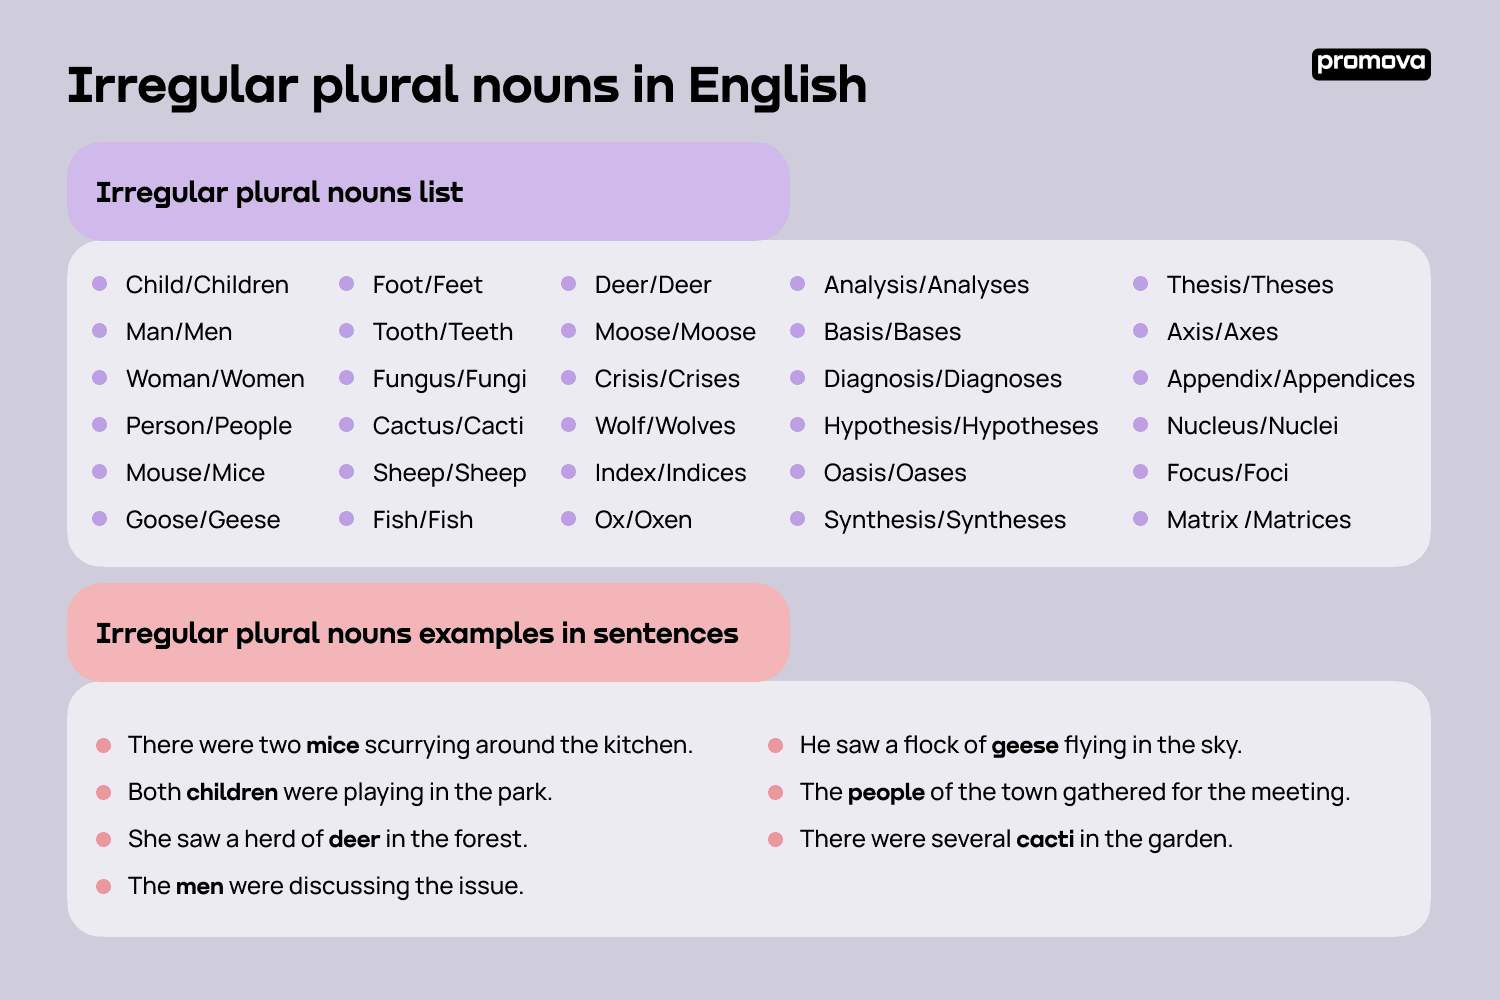 Irregular plural nouns list